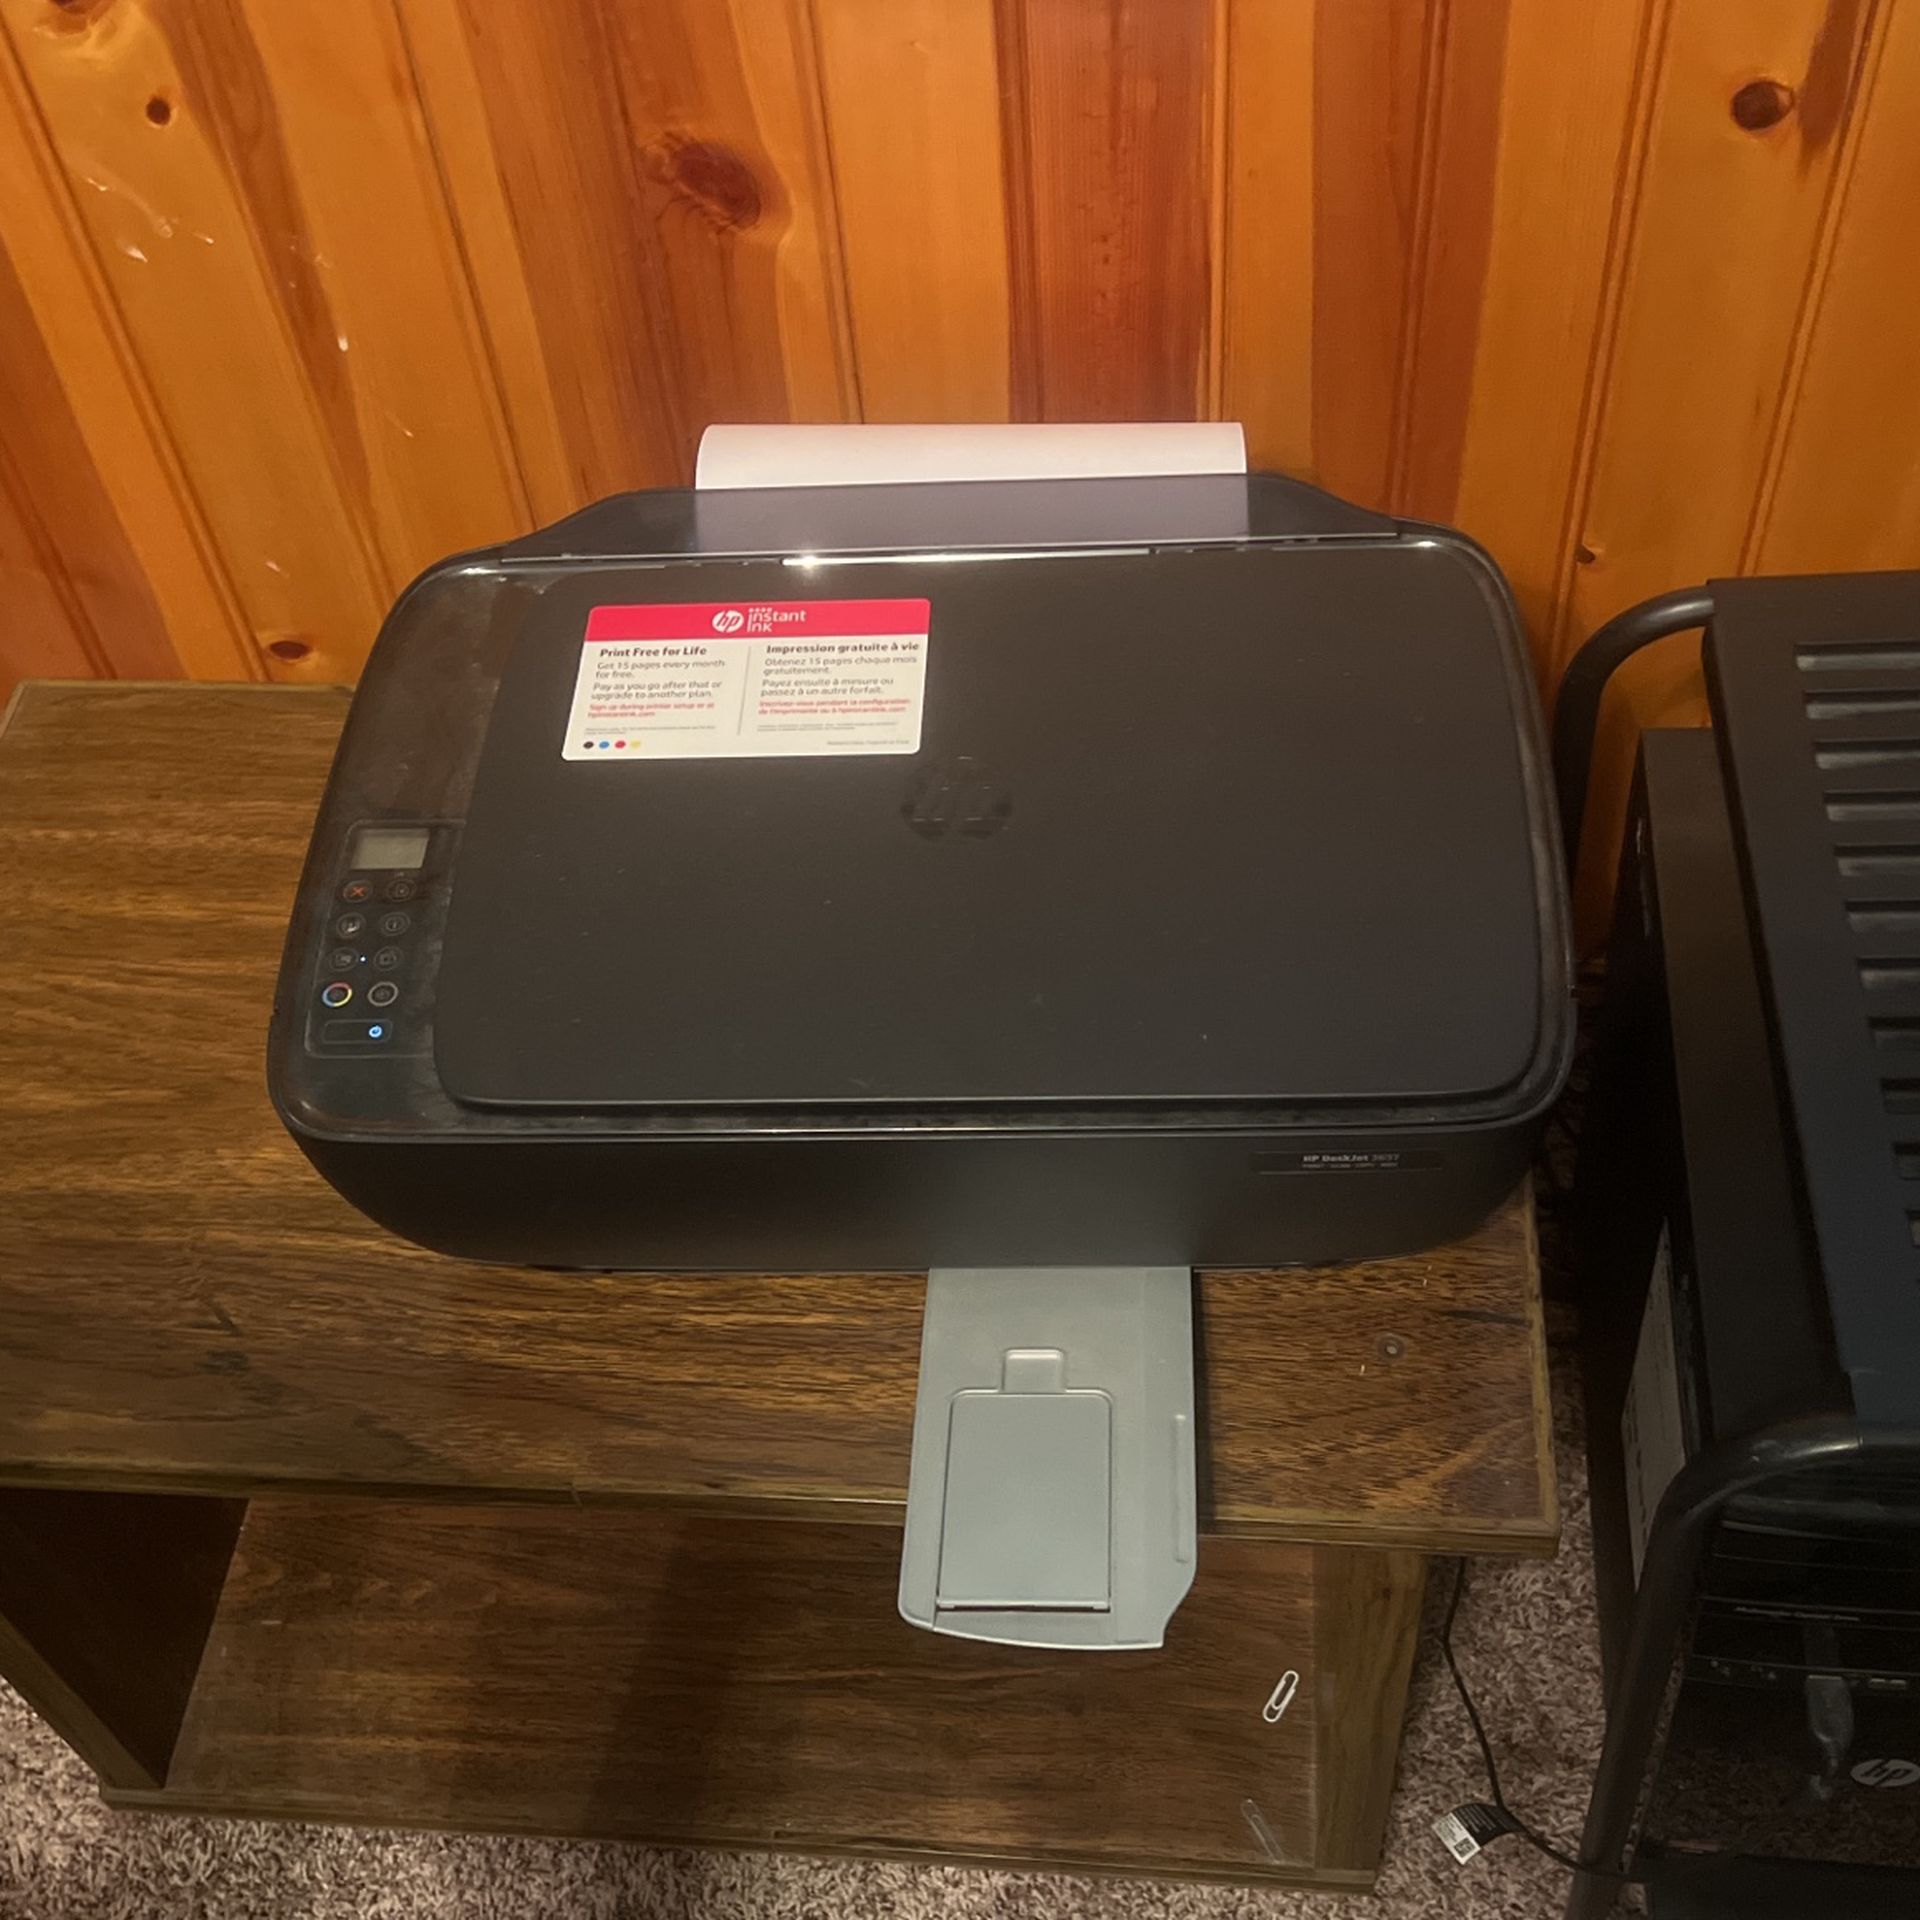 Hewlett-Packard Printer with Stand